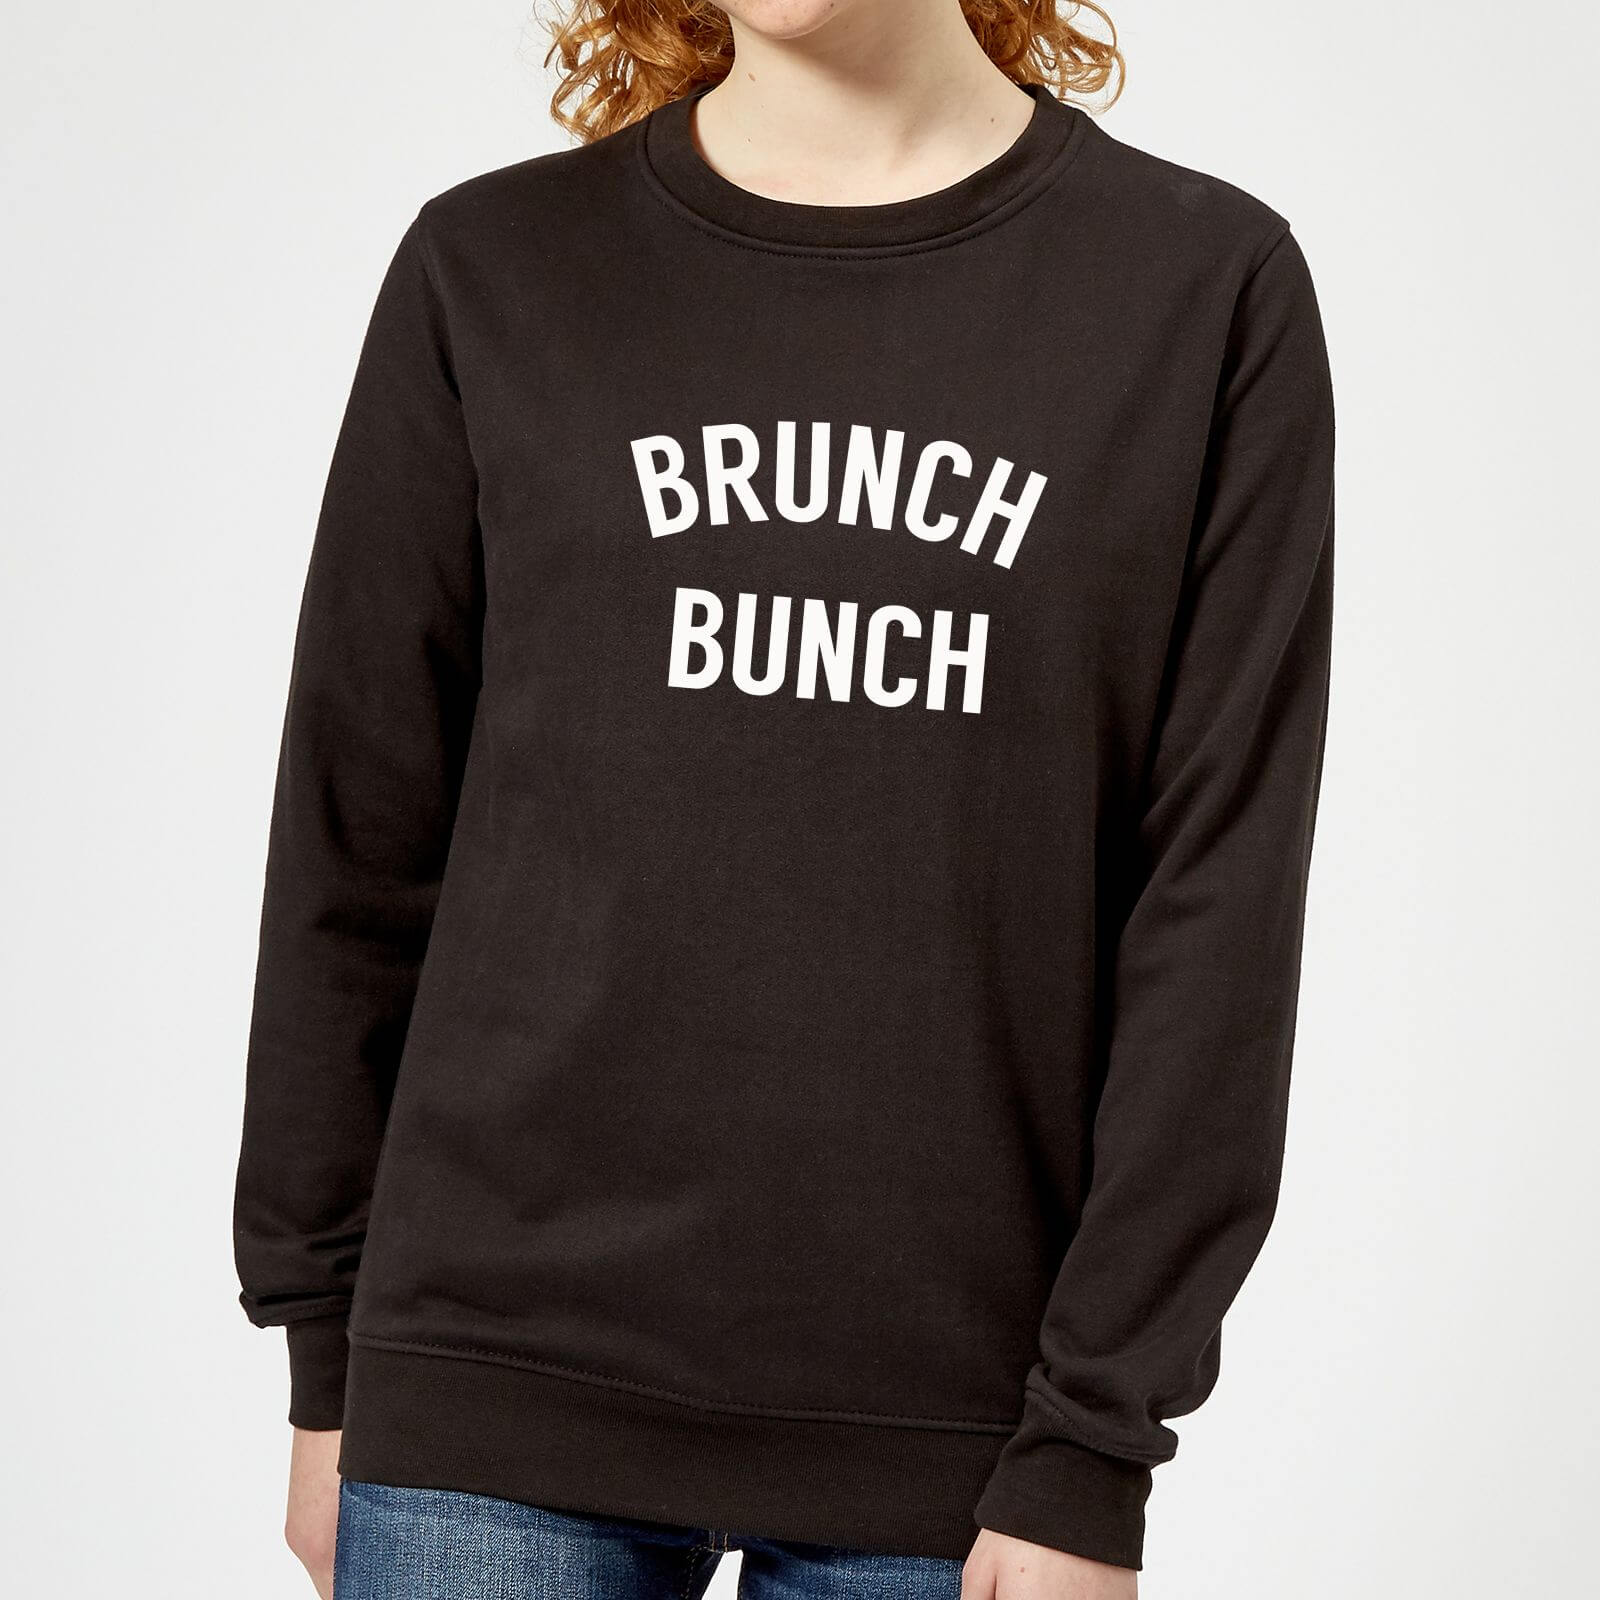 Brunch Bunch Women's Sweatshirt - Black - 5XL - Black